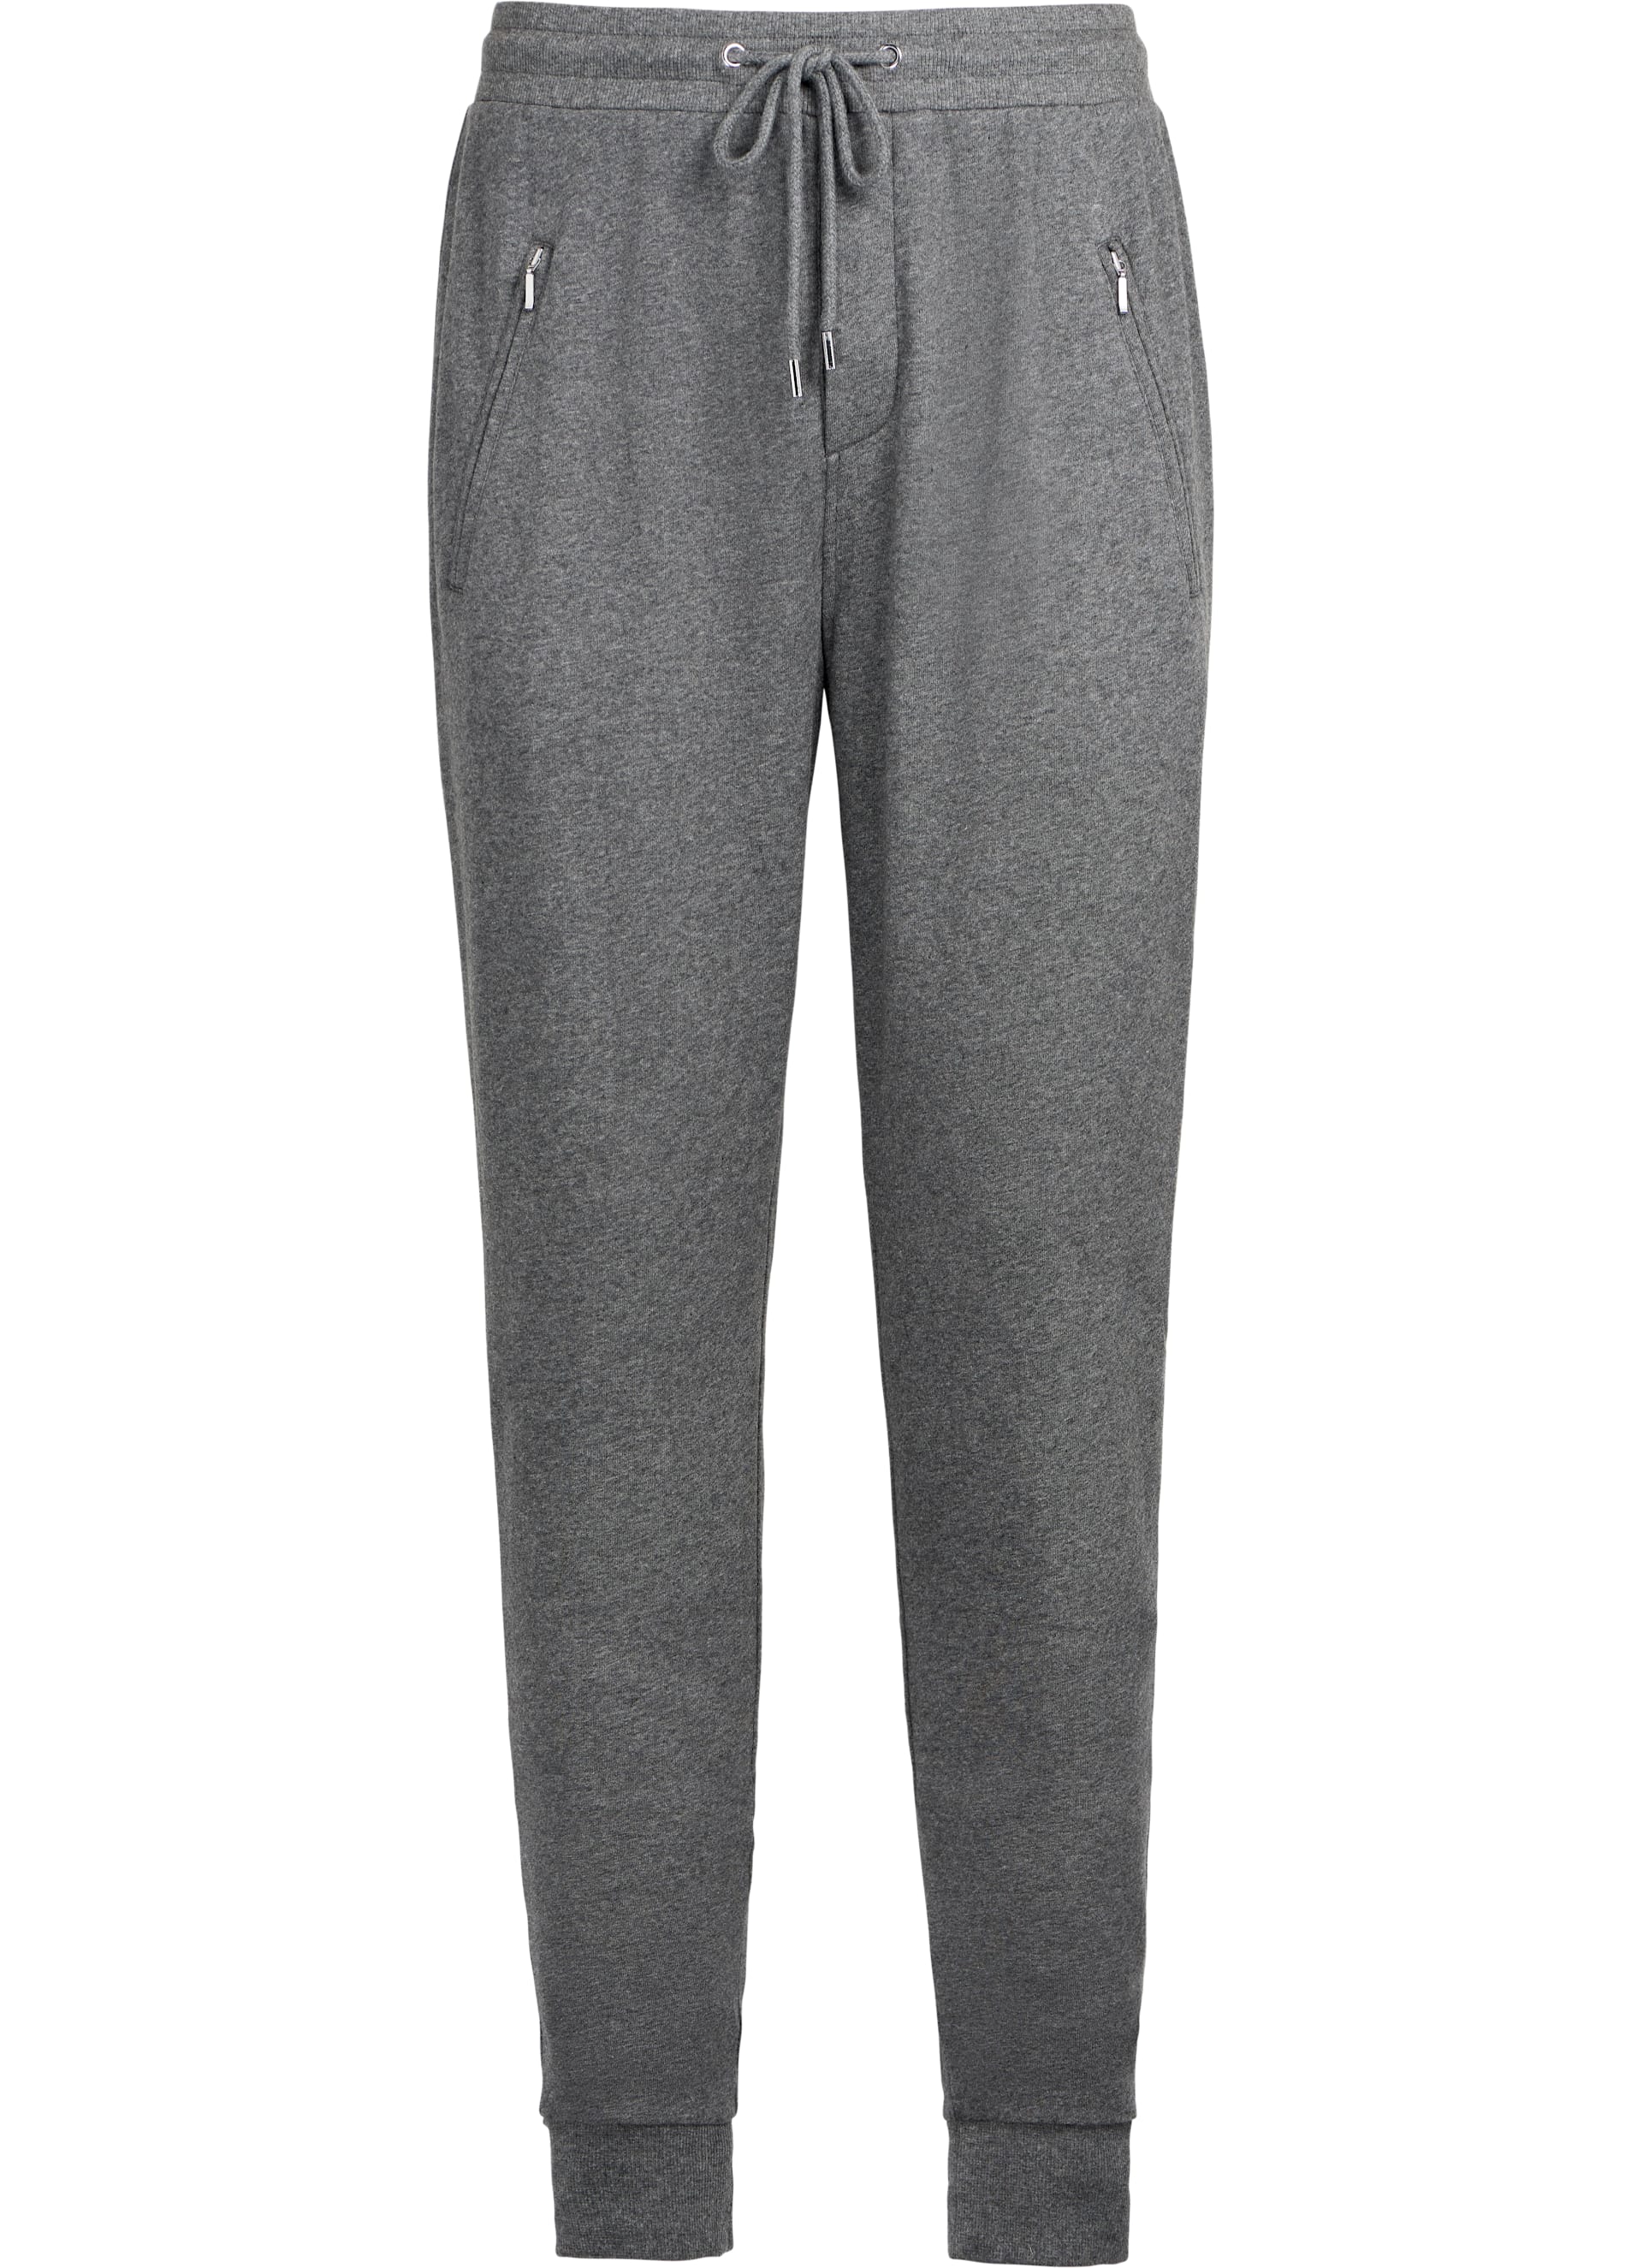 Grey Sweatpants Sp029 | Suitsupply Online Store